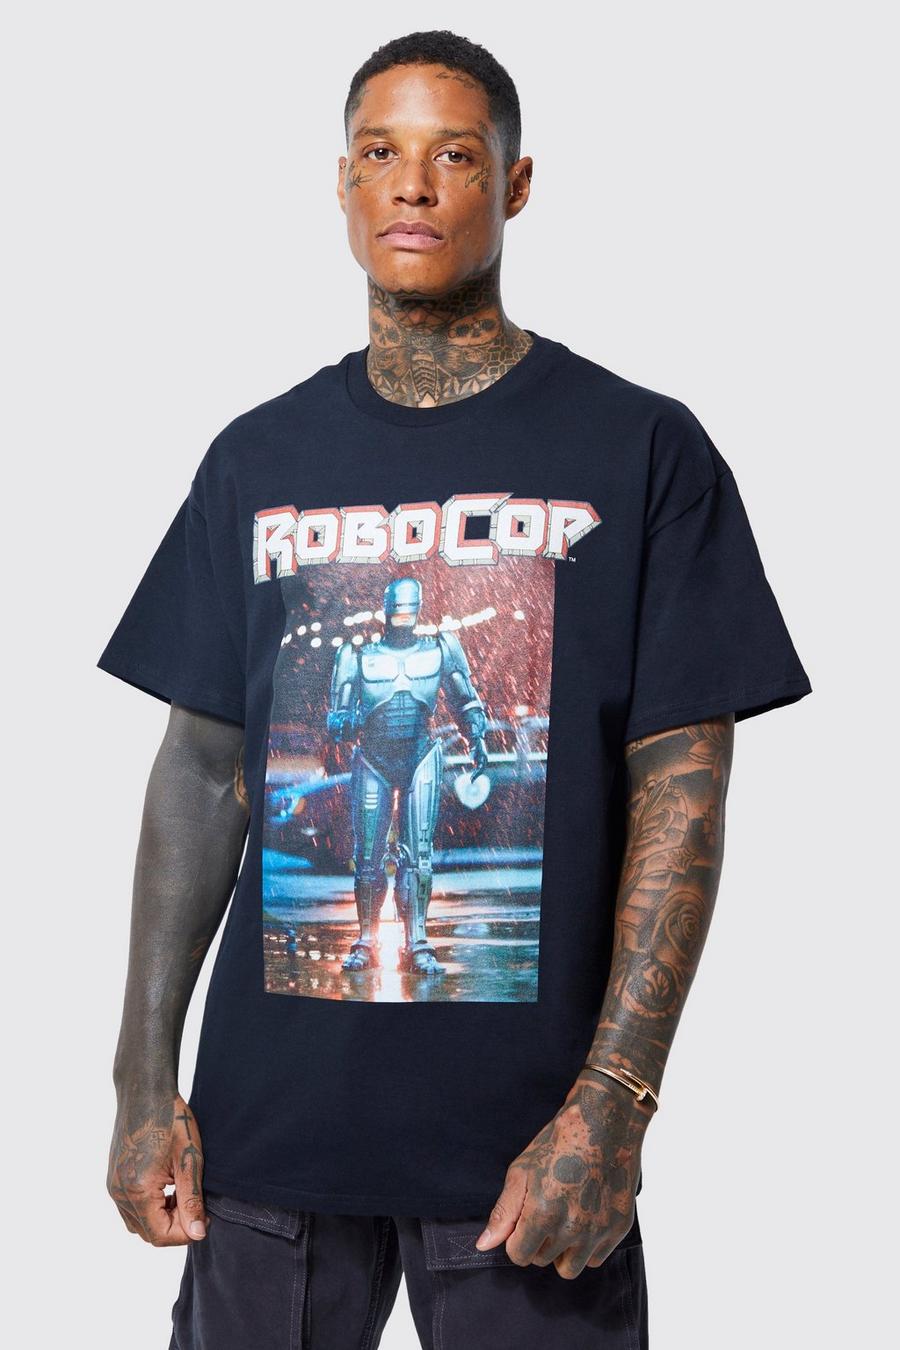 Black schwarz Oversized Robocop License T-shirt